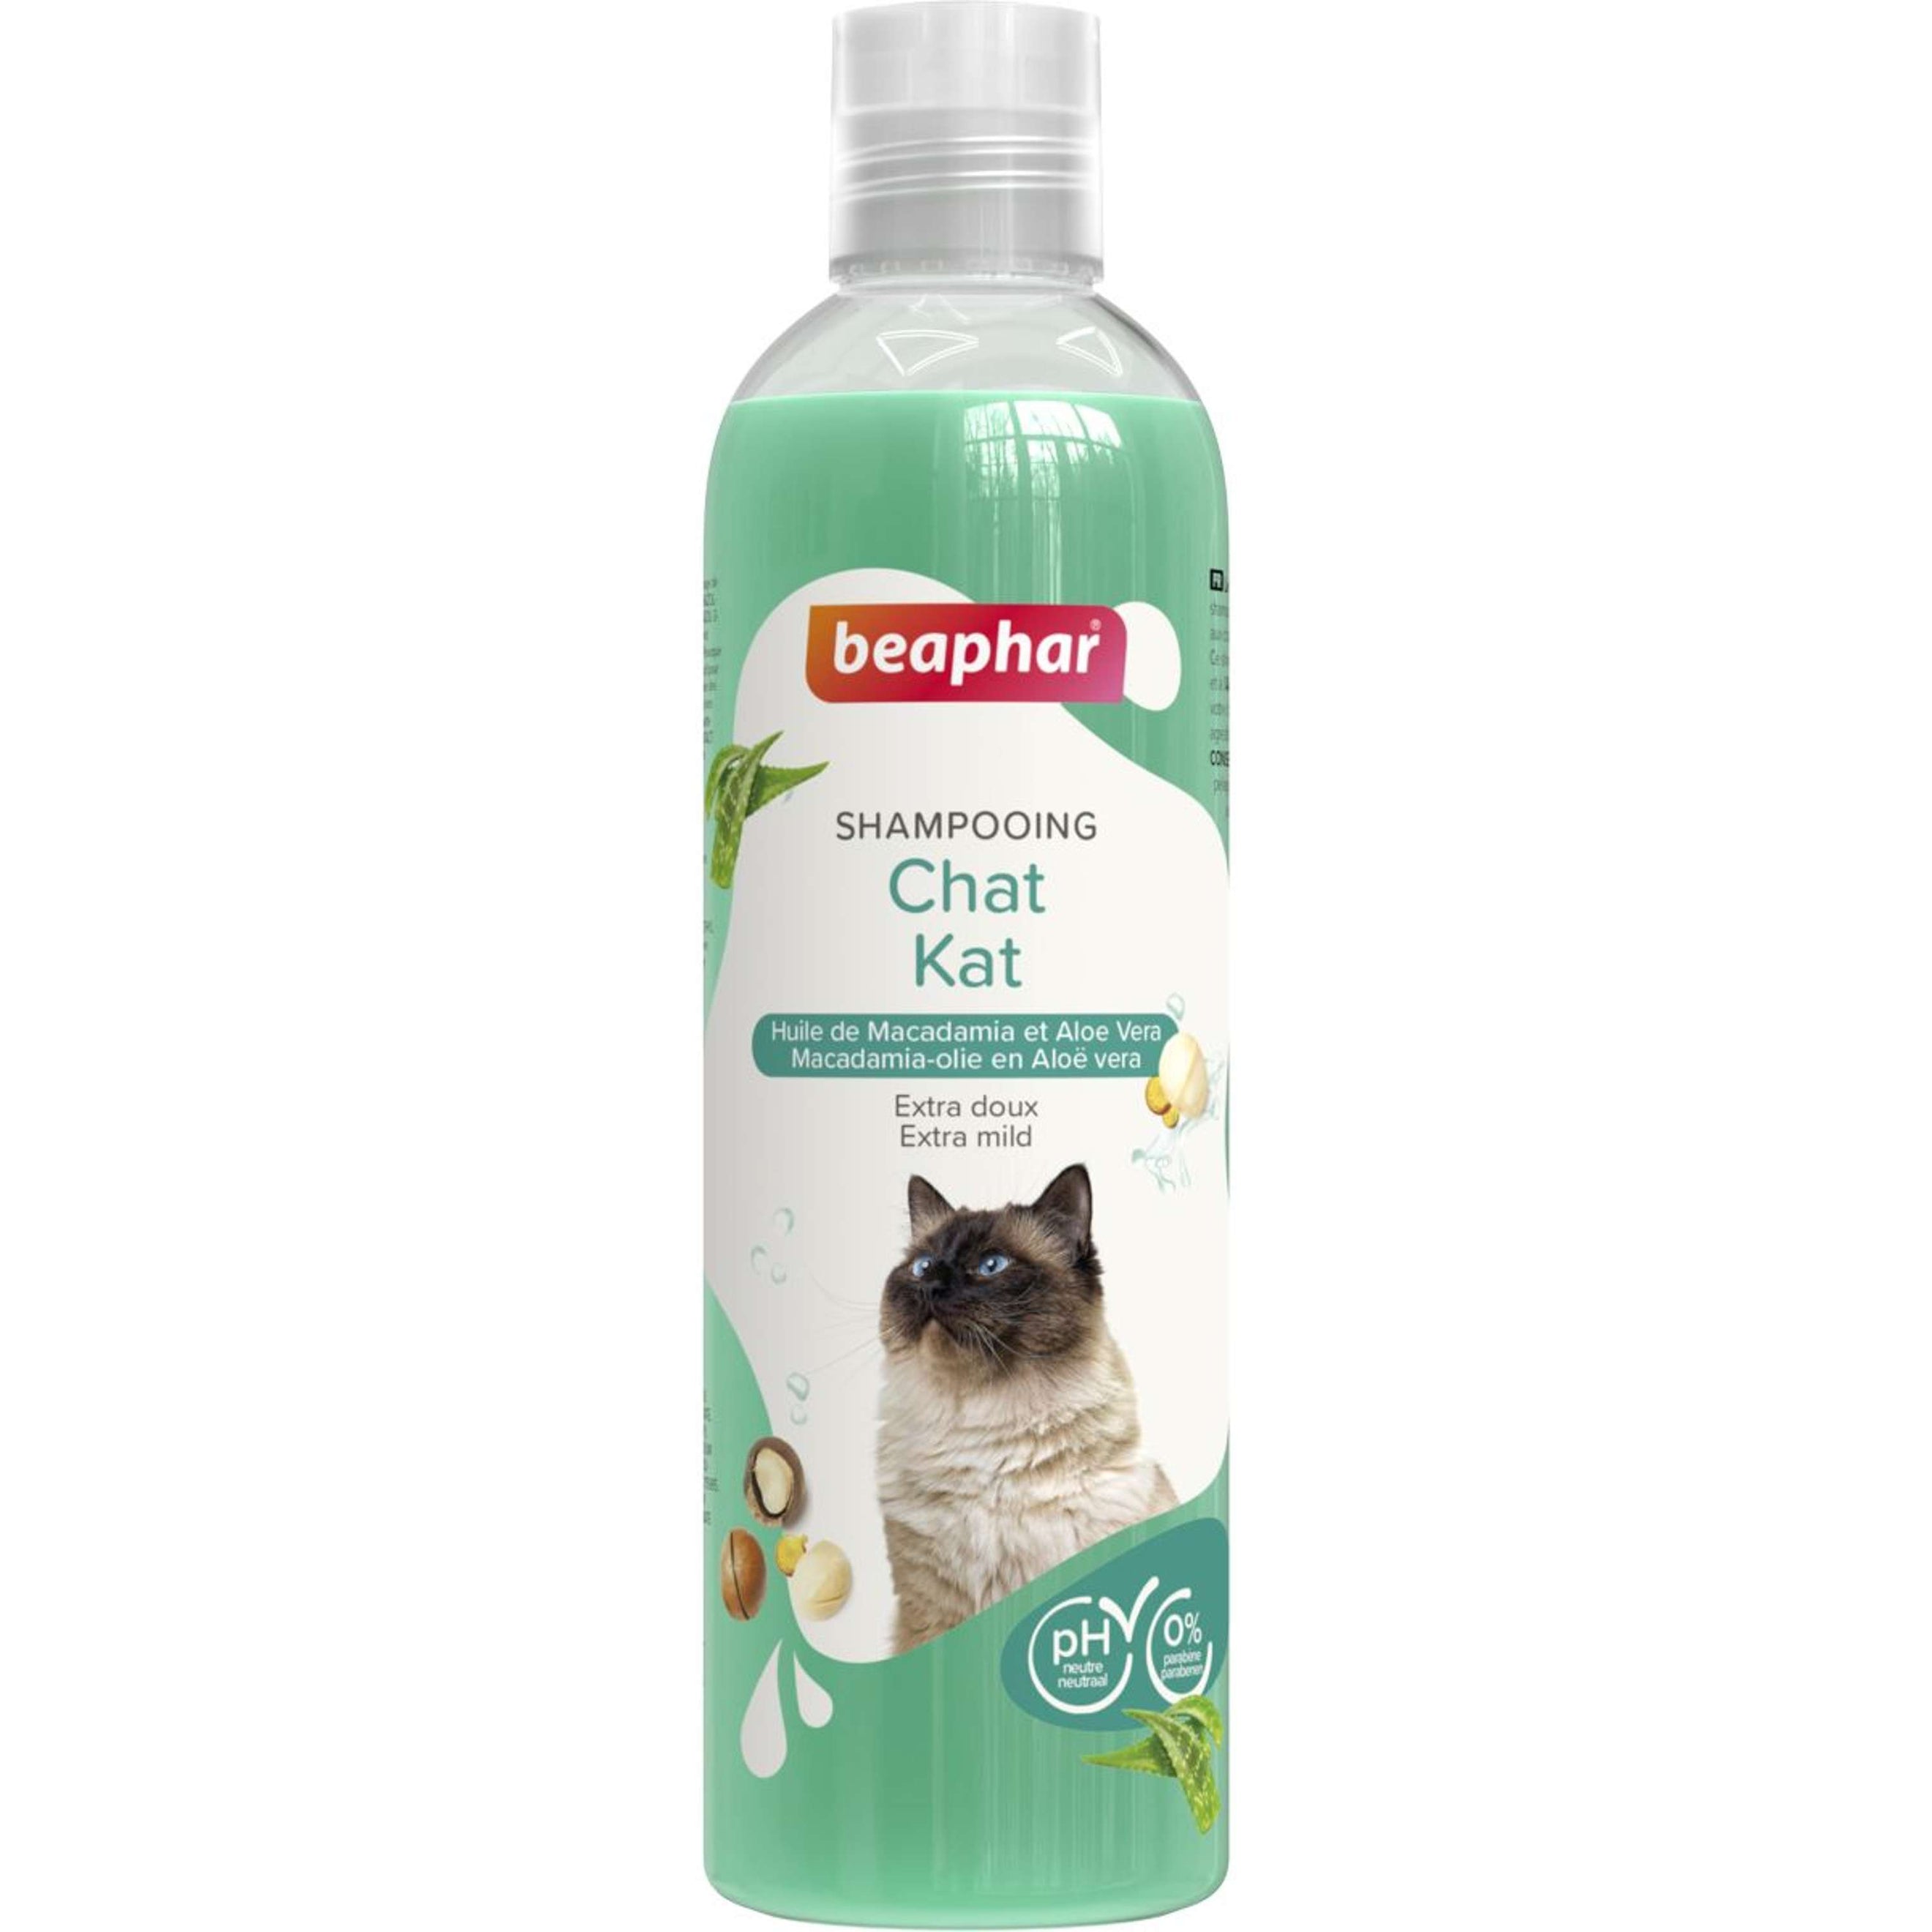 Beaphar Shampooing Chat